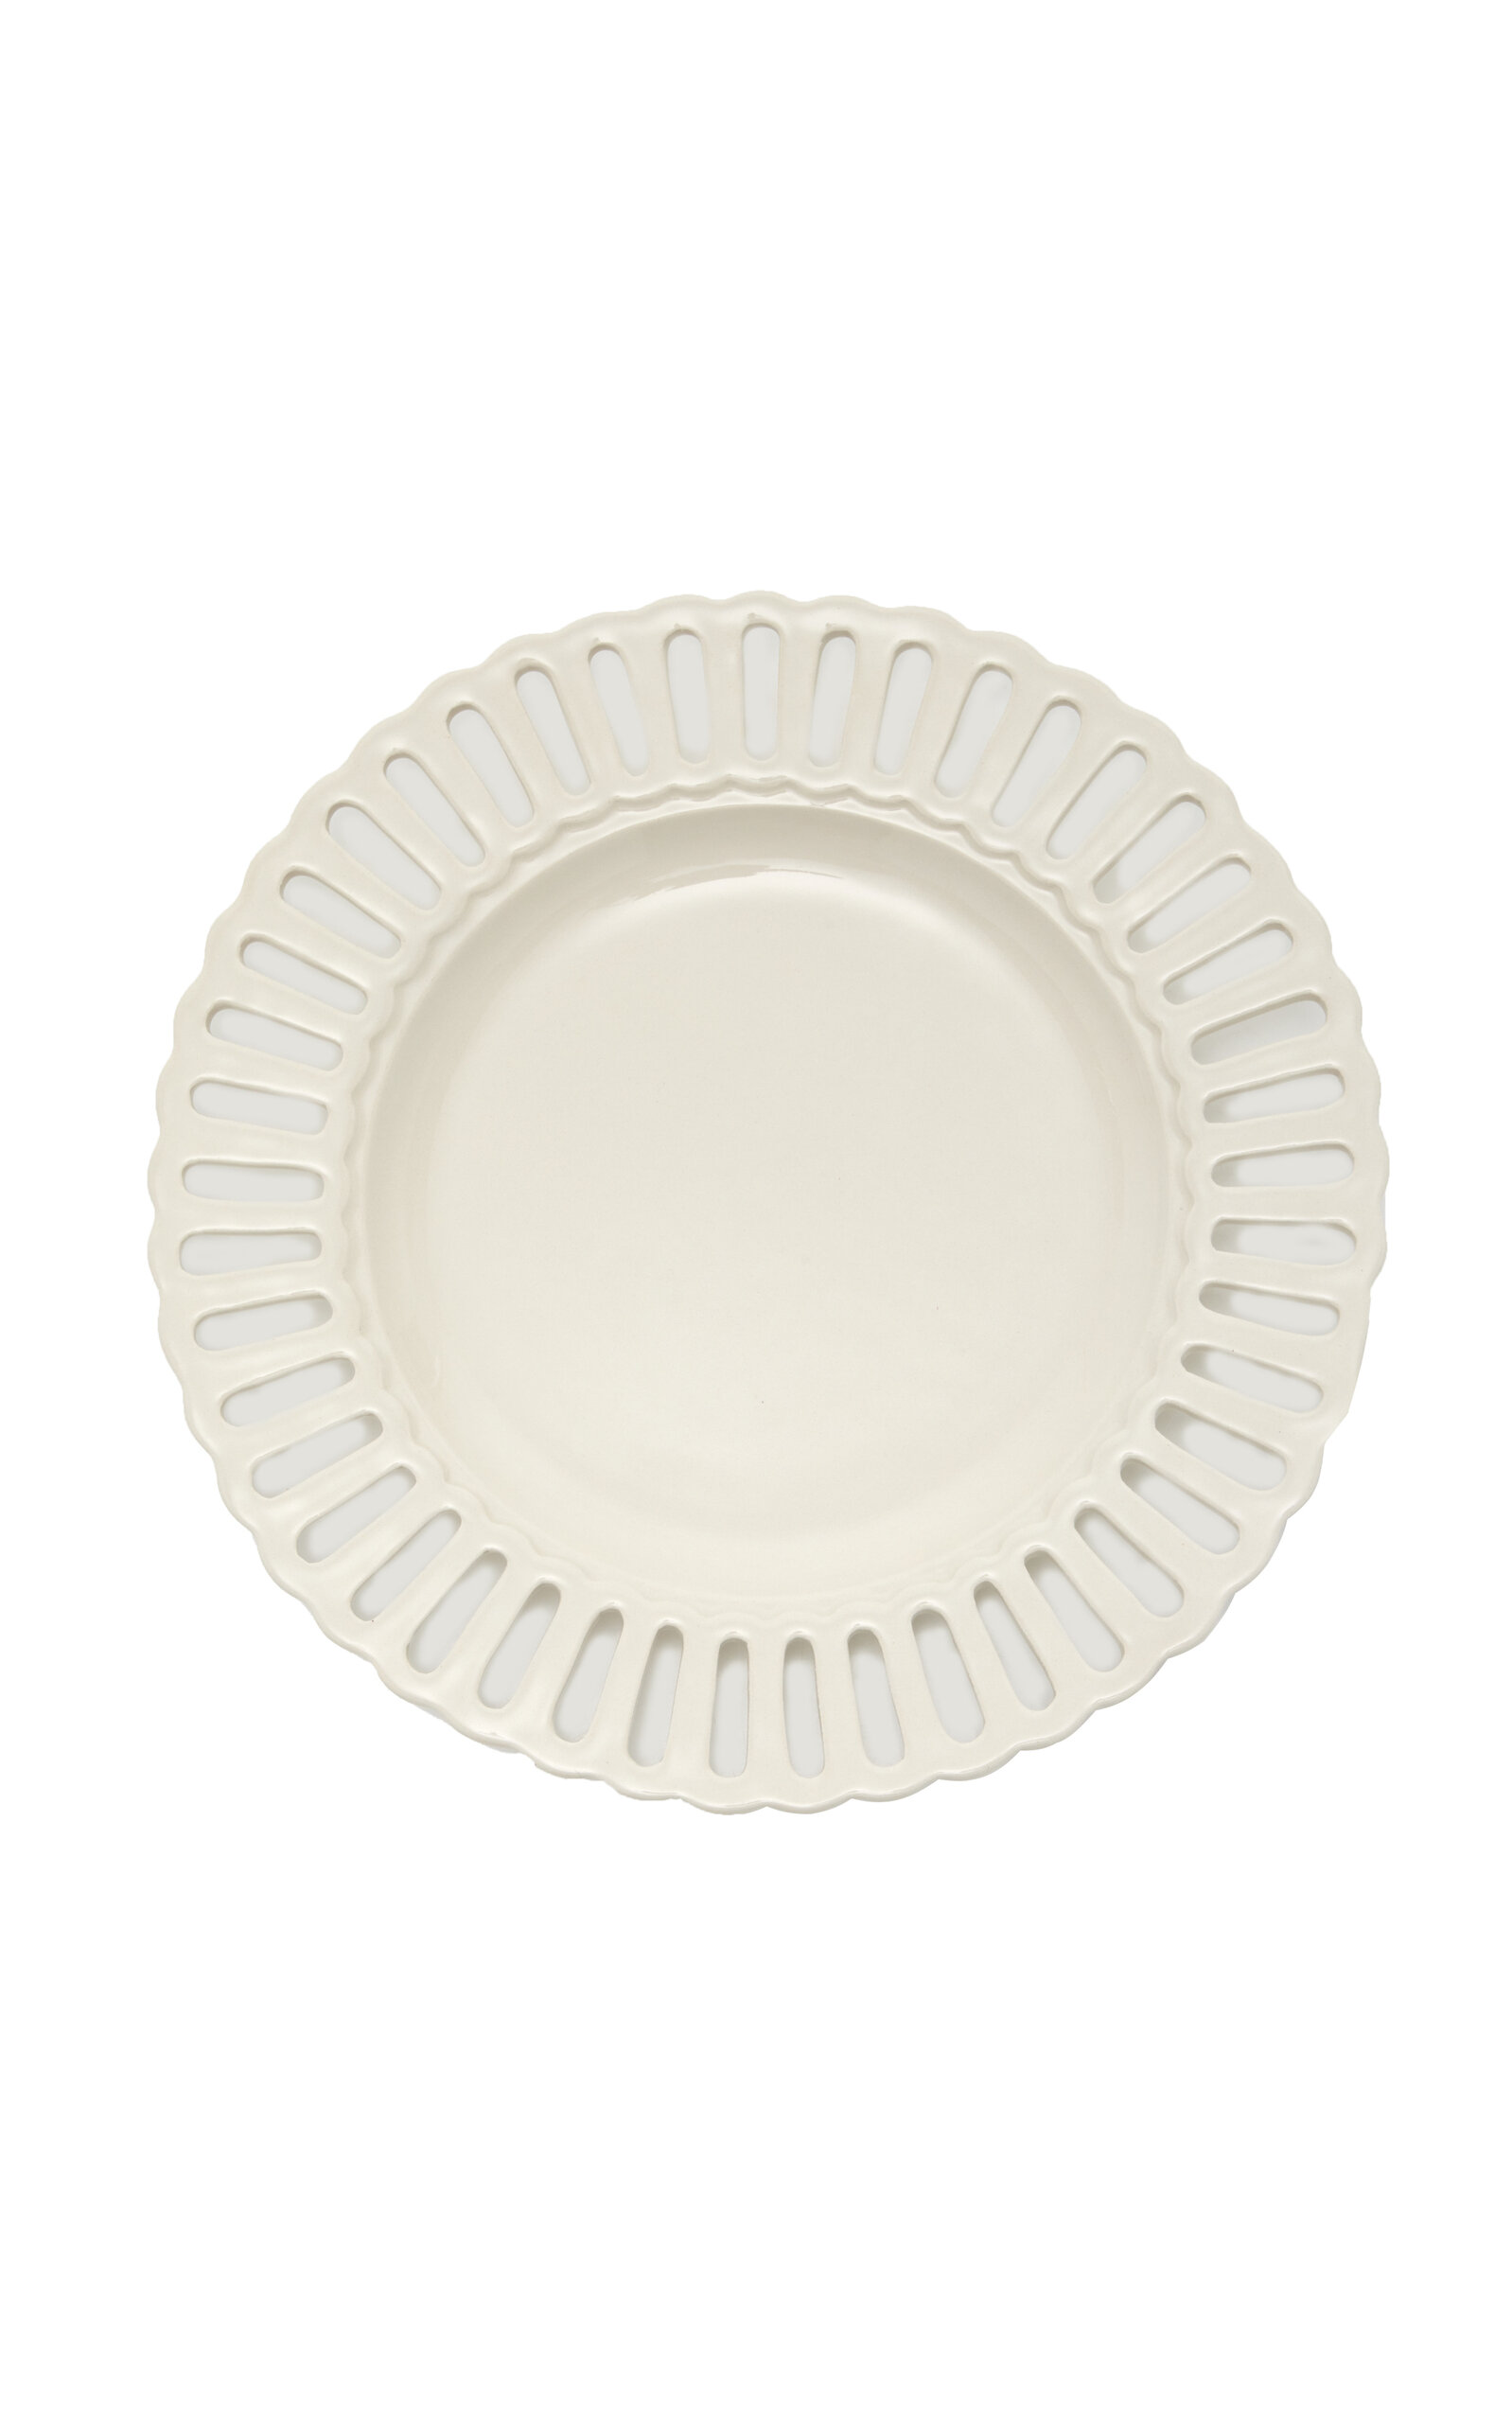 Moda Domus Balconata Creamware Dinner Plate In White